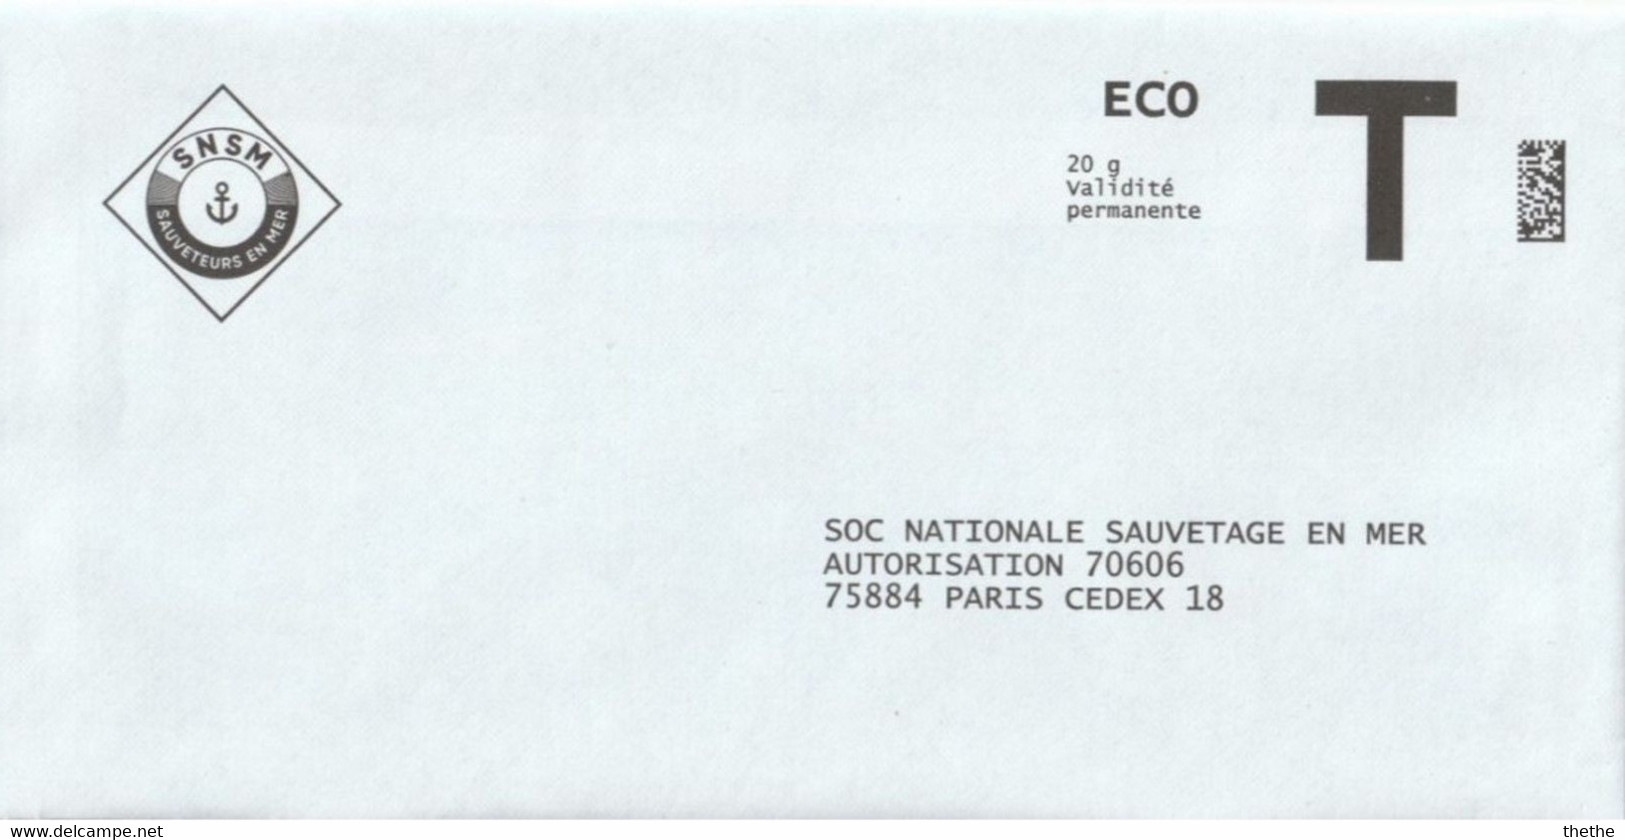 SNSM - SOC NATIONALE SAUVETAGE EN MER - ECO T - Cartes/Enveloppes Réponse T